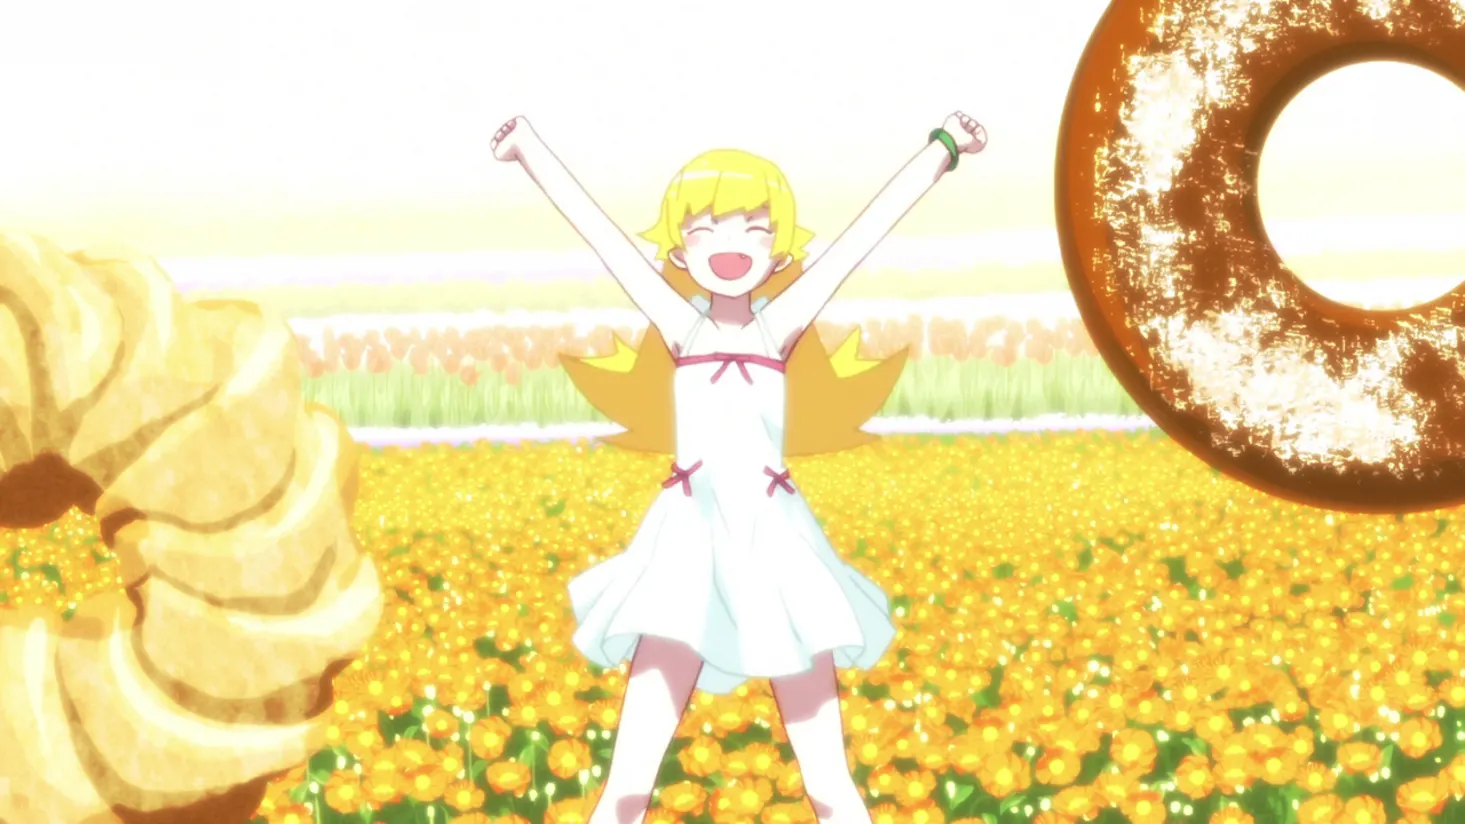 I love Shinobu and her innocent donut excitement.